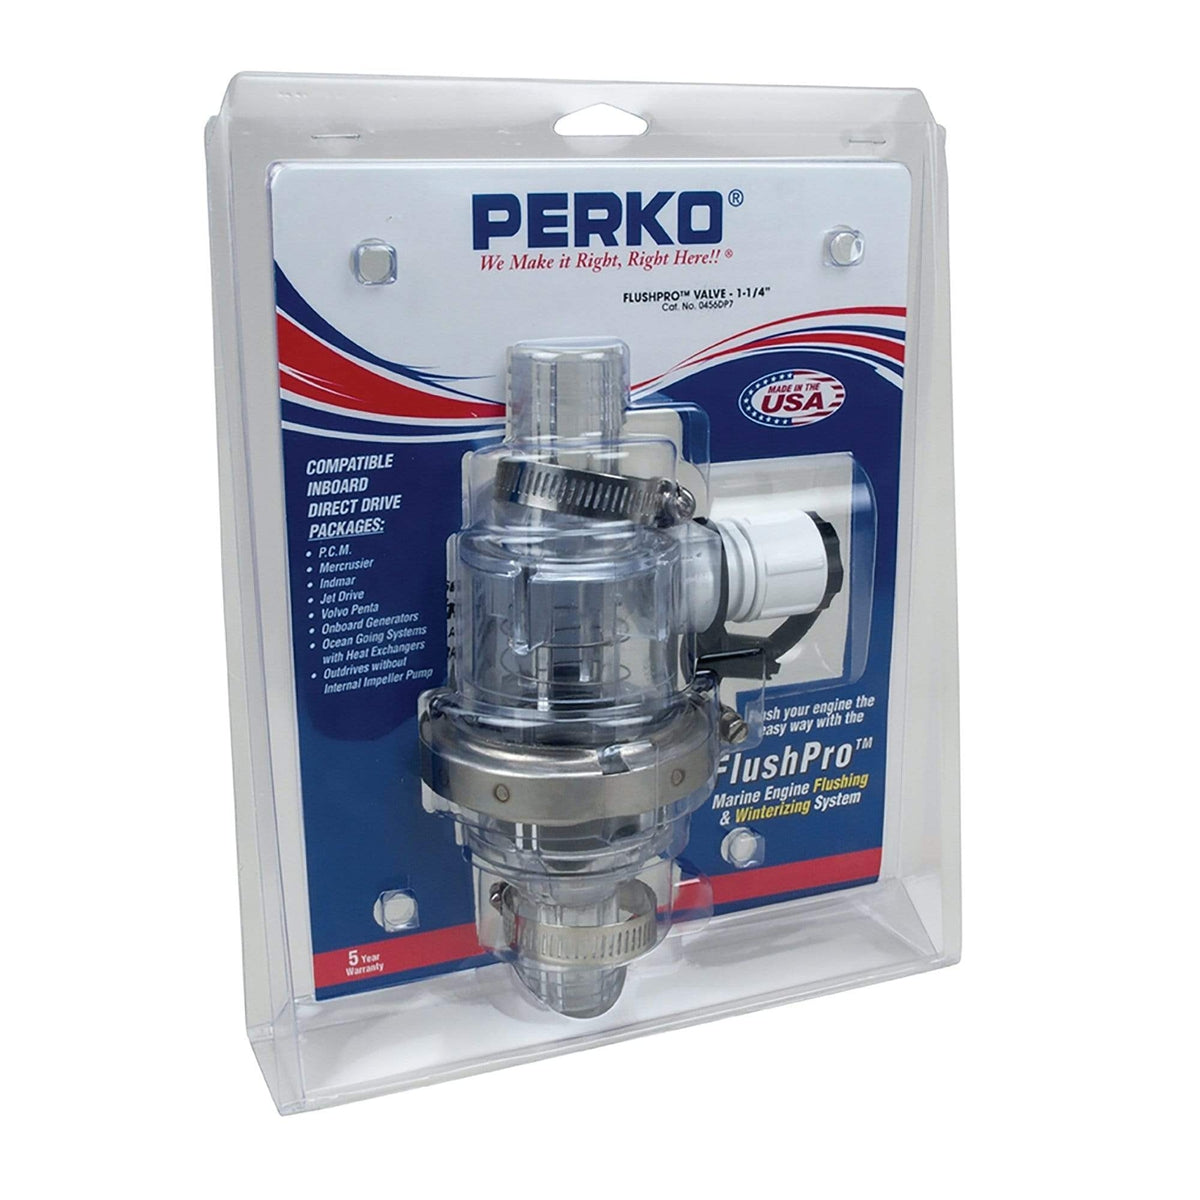 Perko Qualifies for Free Shipping Perko Flush Pro 1" #0456DP6